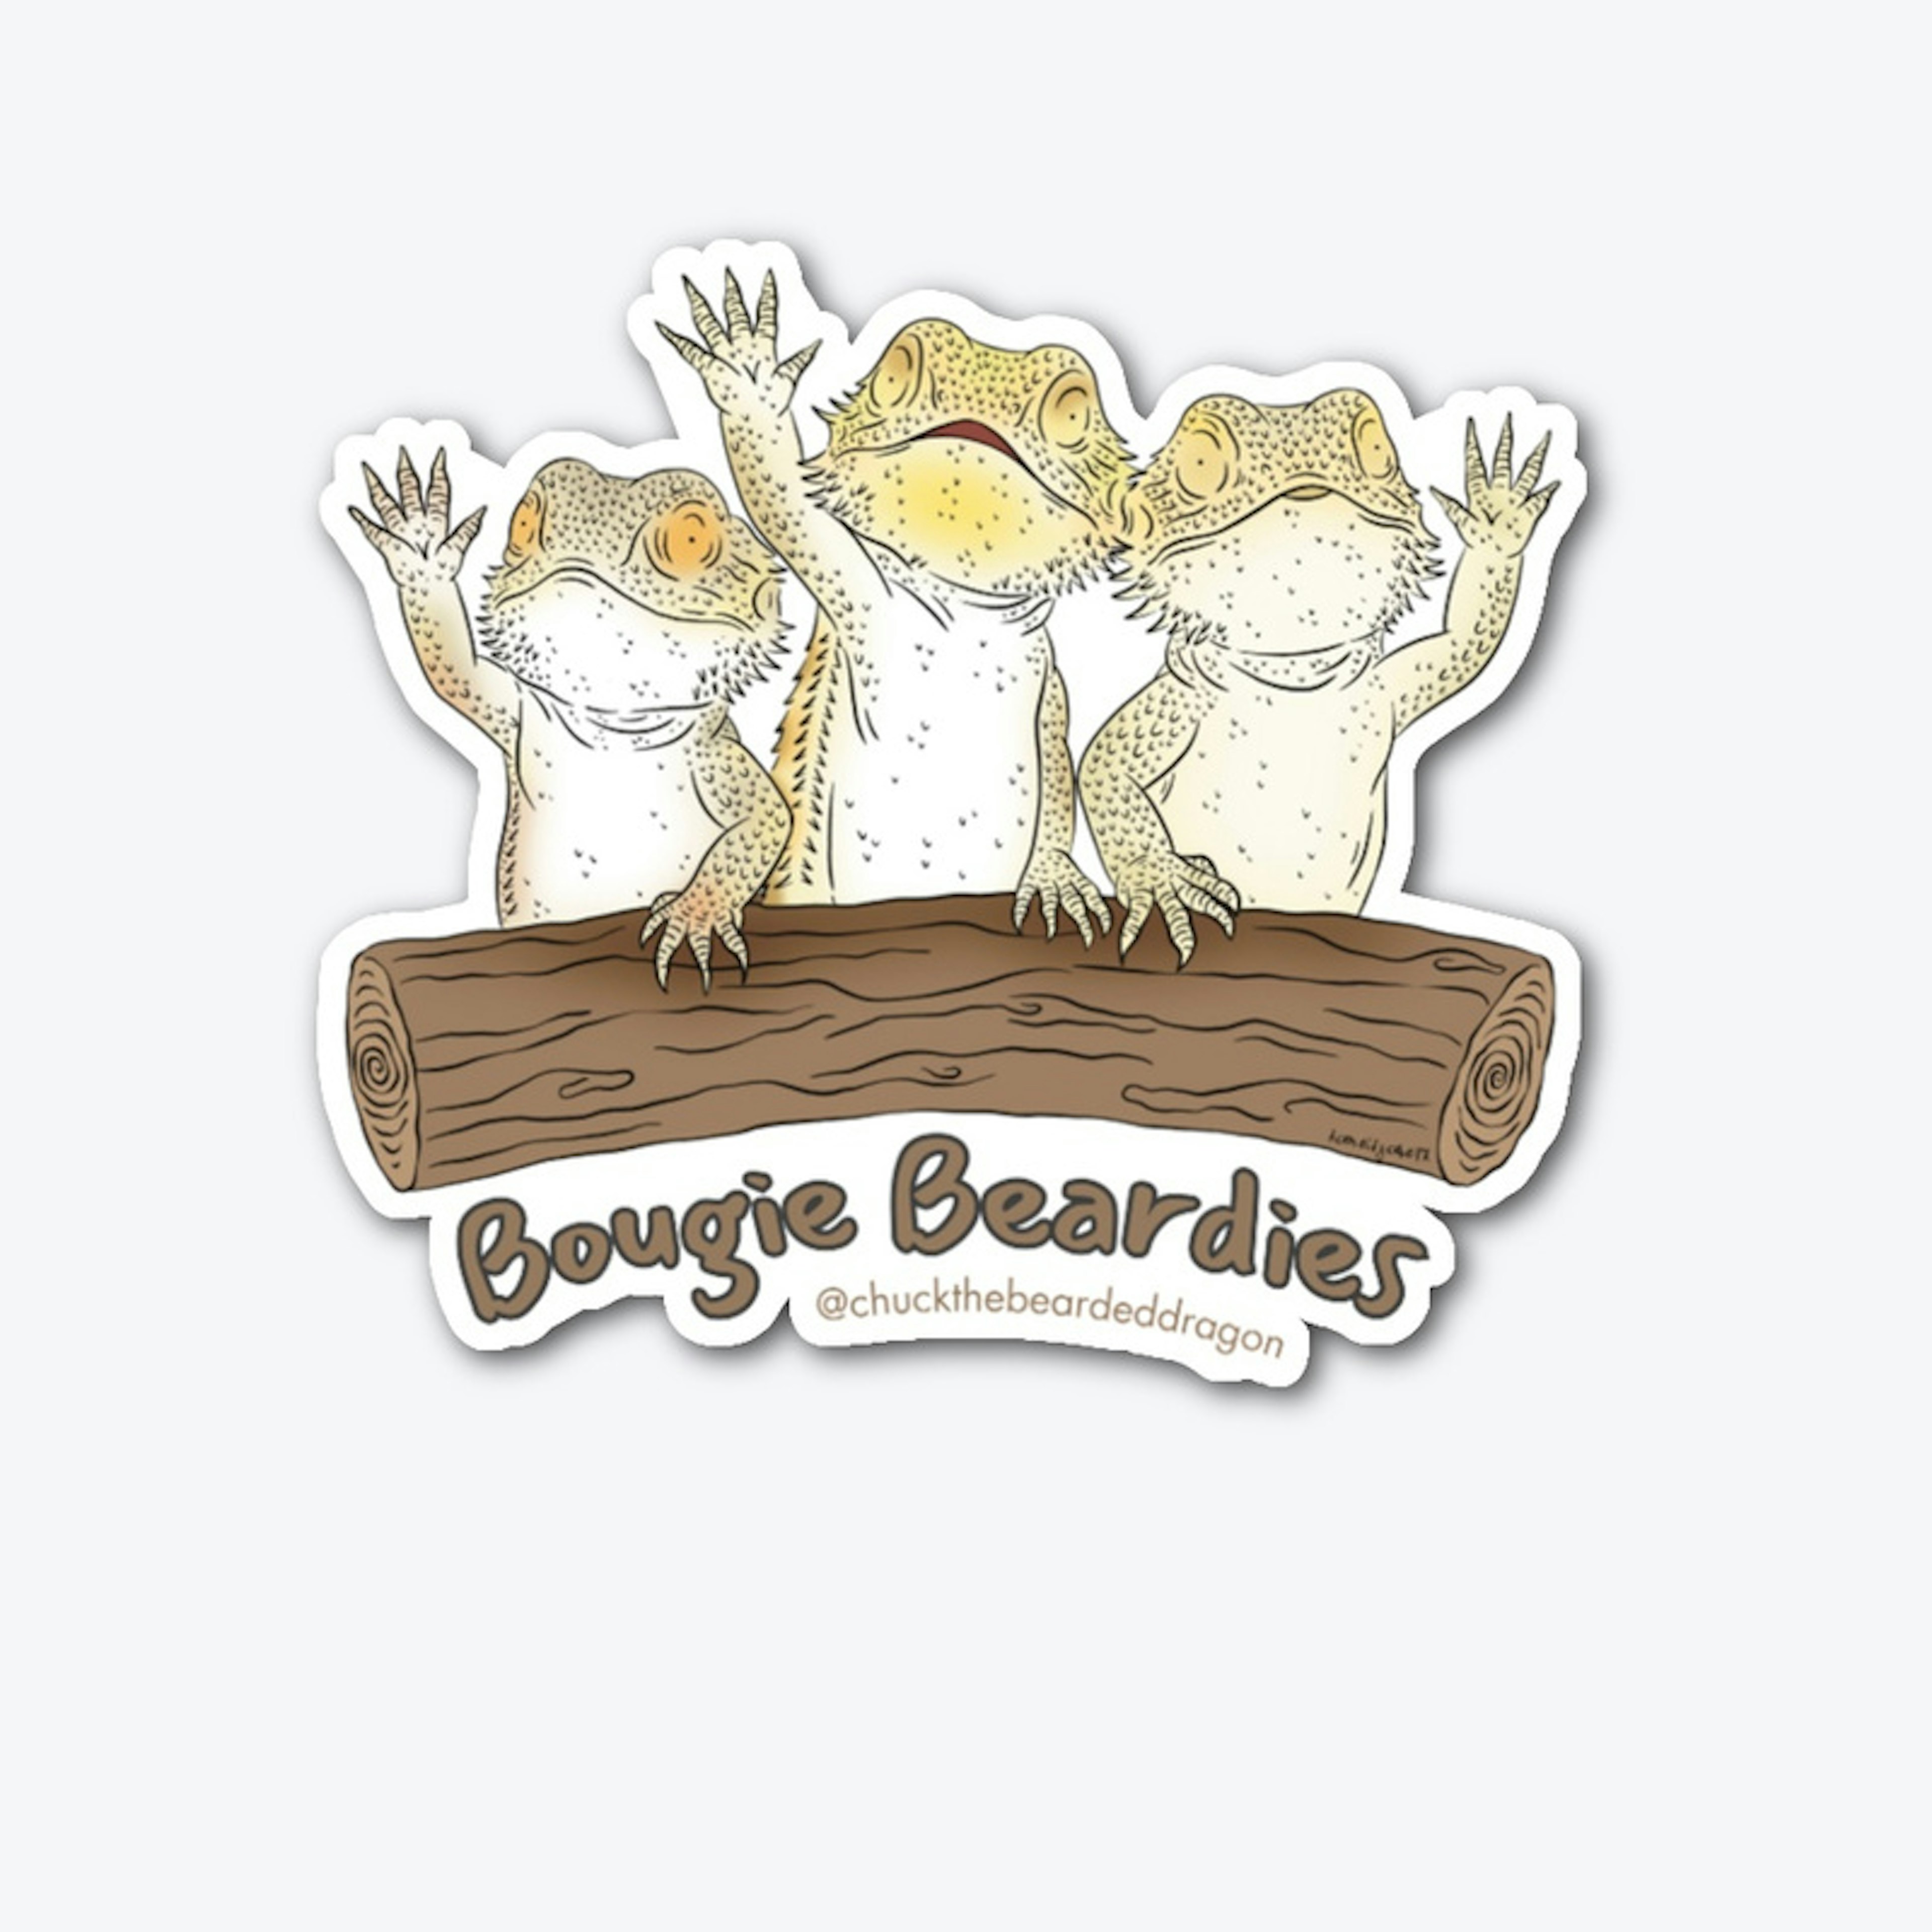 Bougie Beardies logo